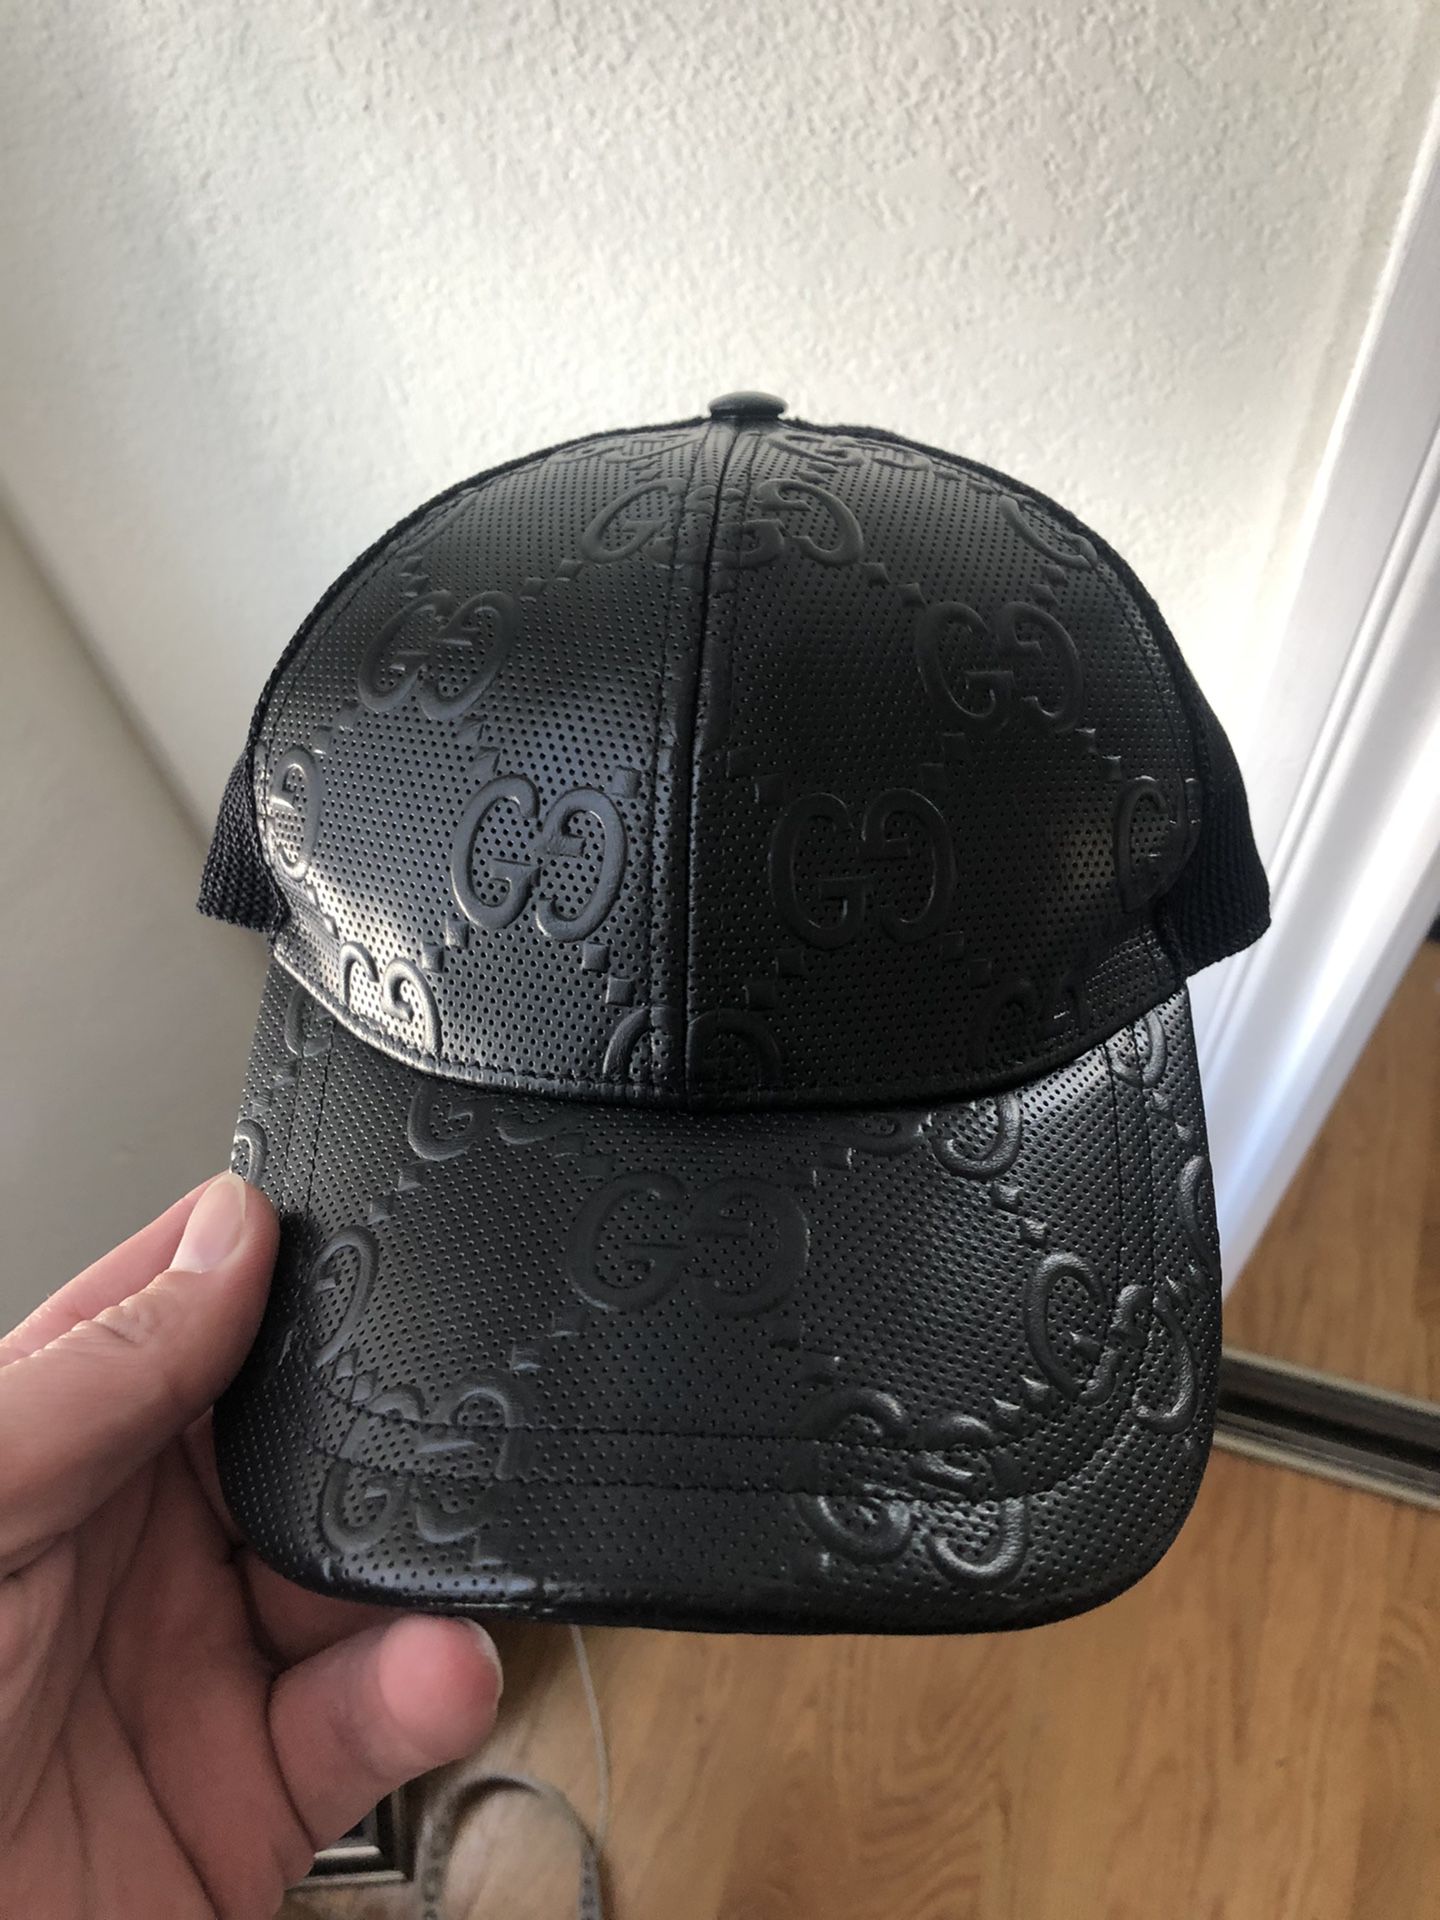 Gucci Trucker Hat